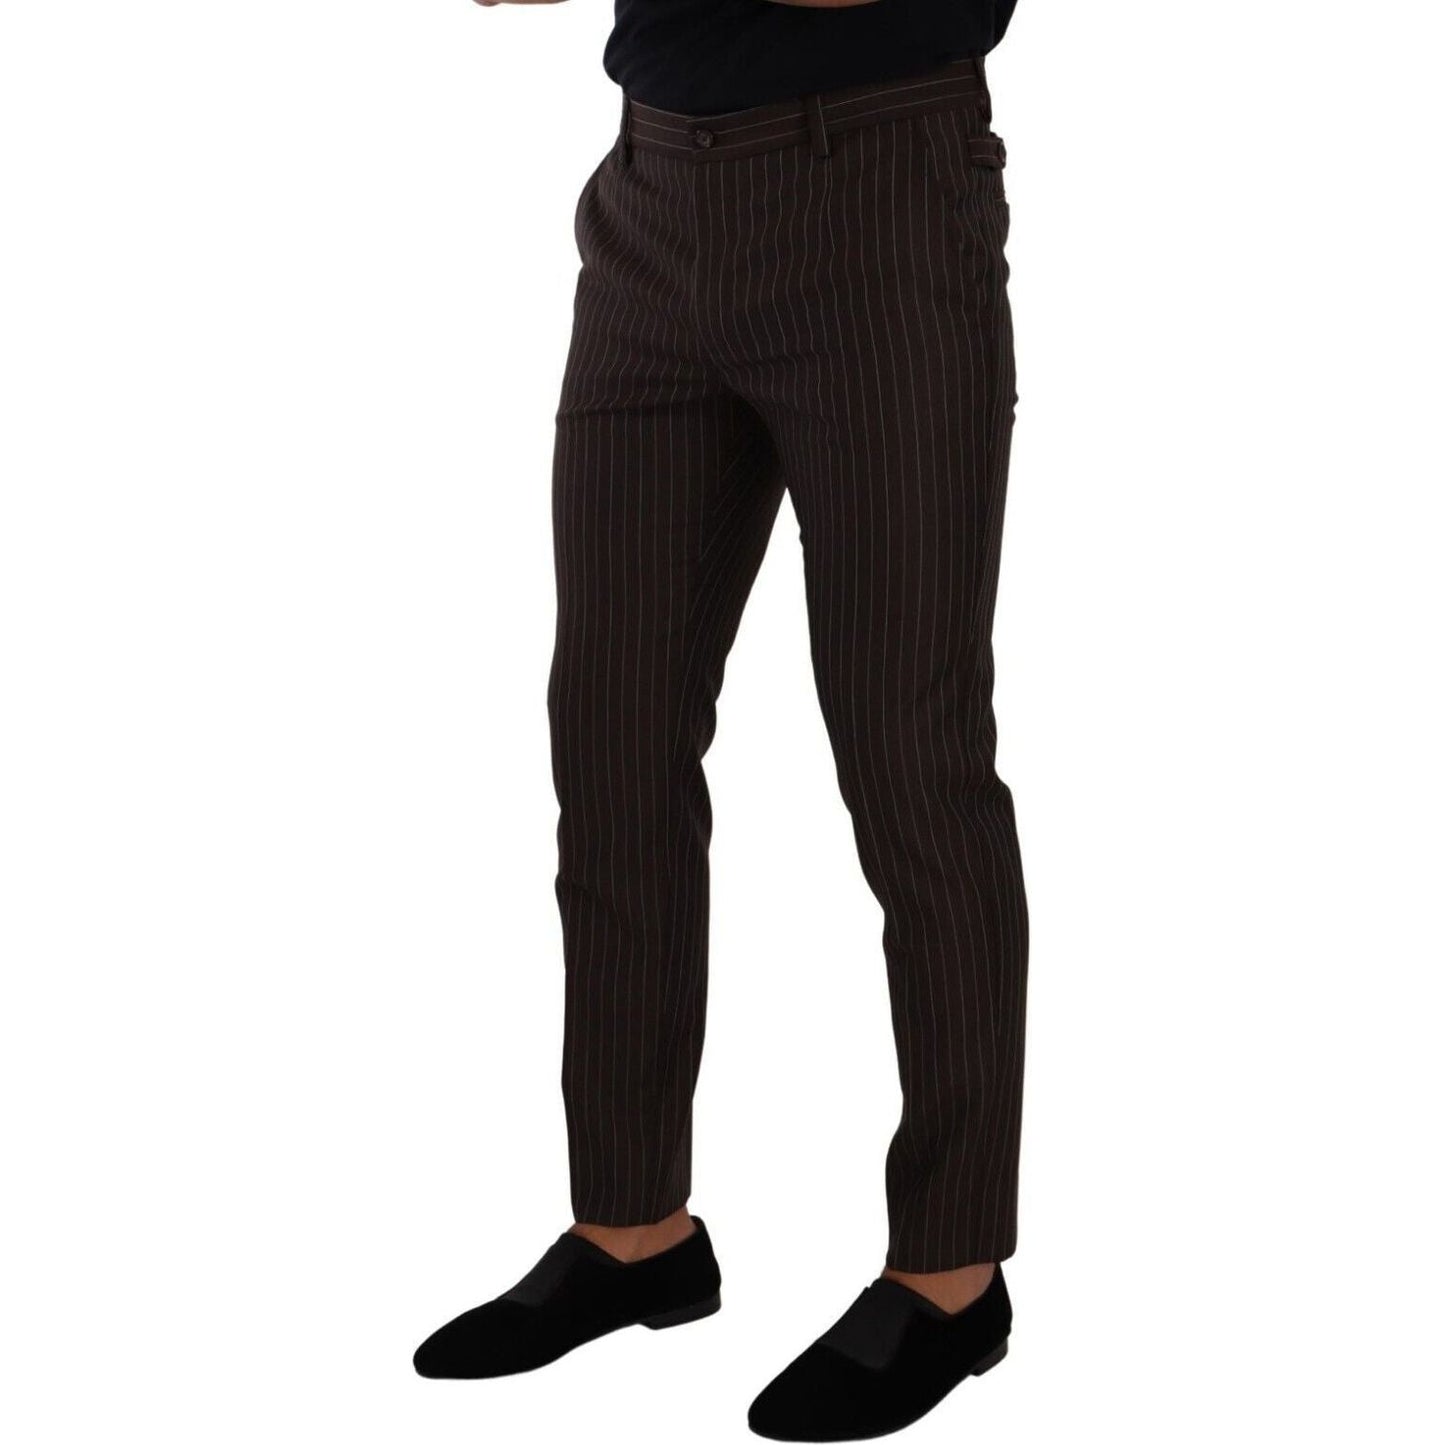 Dolce & Gabbana Elegant Brown Striped Woolen Men's Trousers brown-striped-wool-formal-trouser-dress-pants